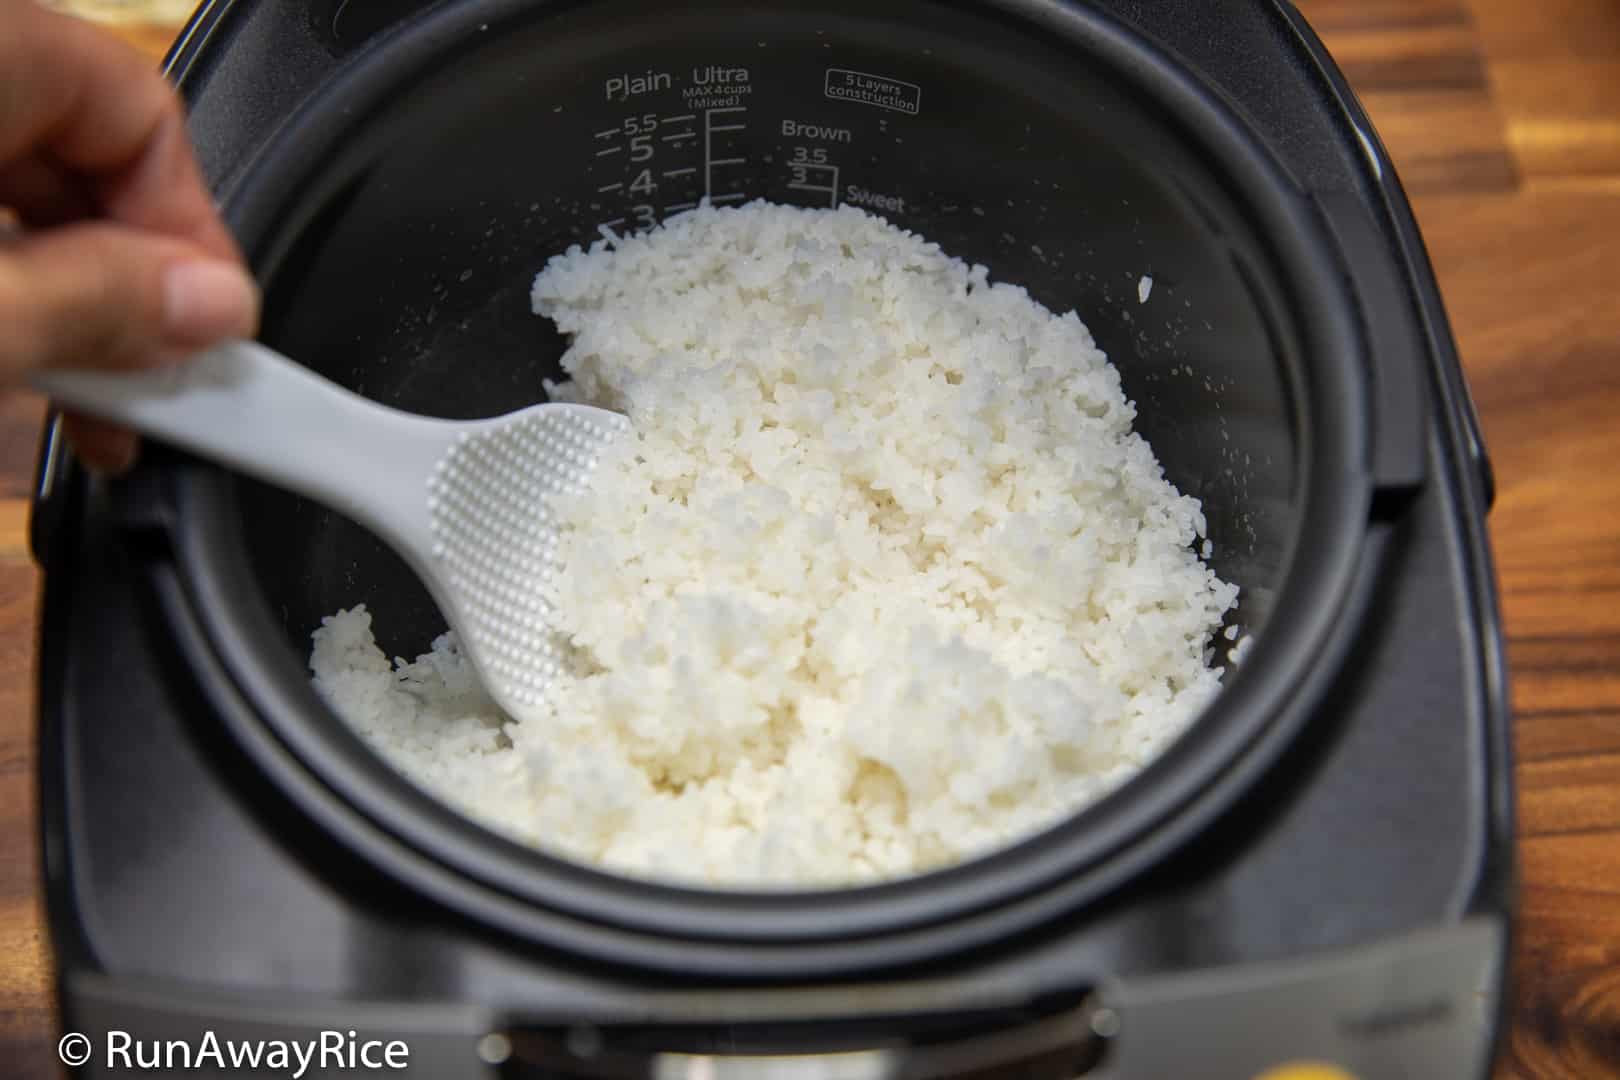 Broken Rice - What Is It? | RunAwayRice